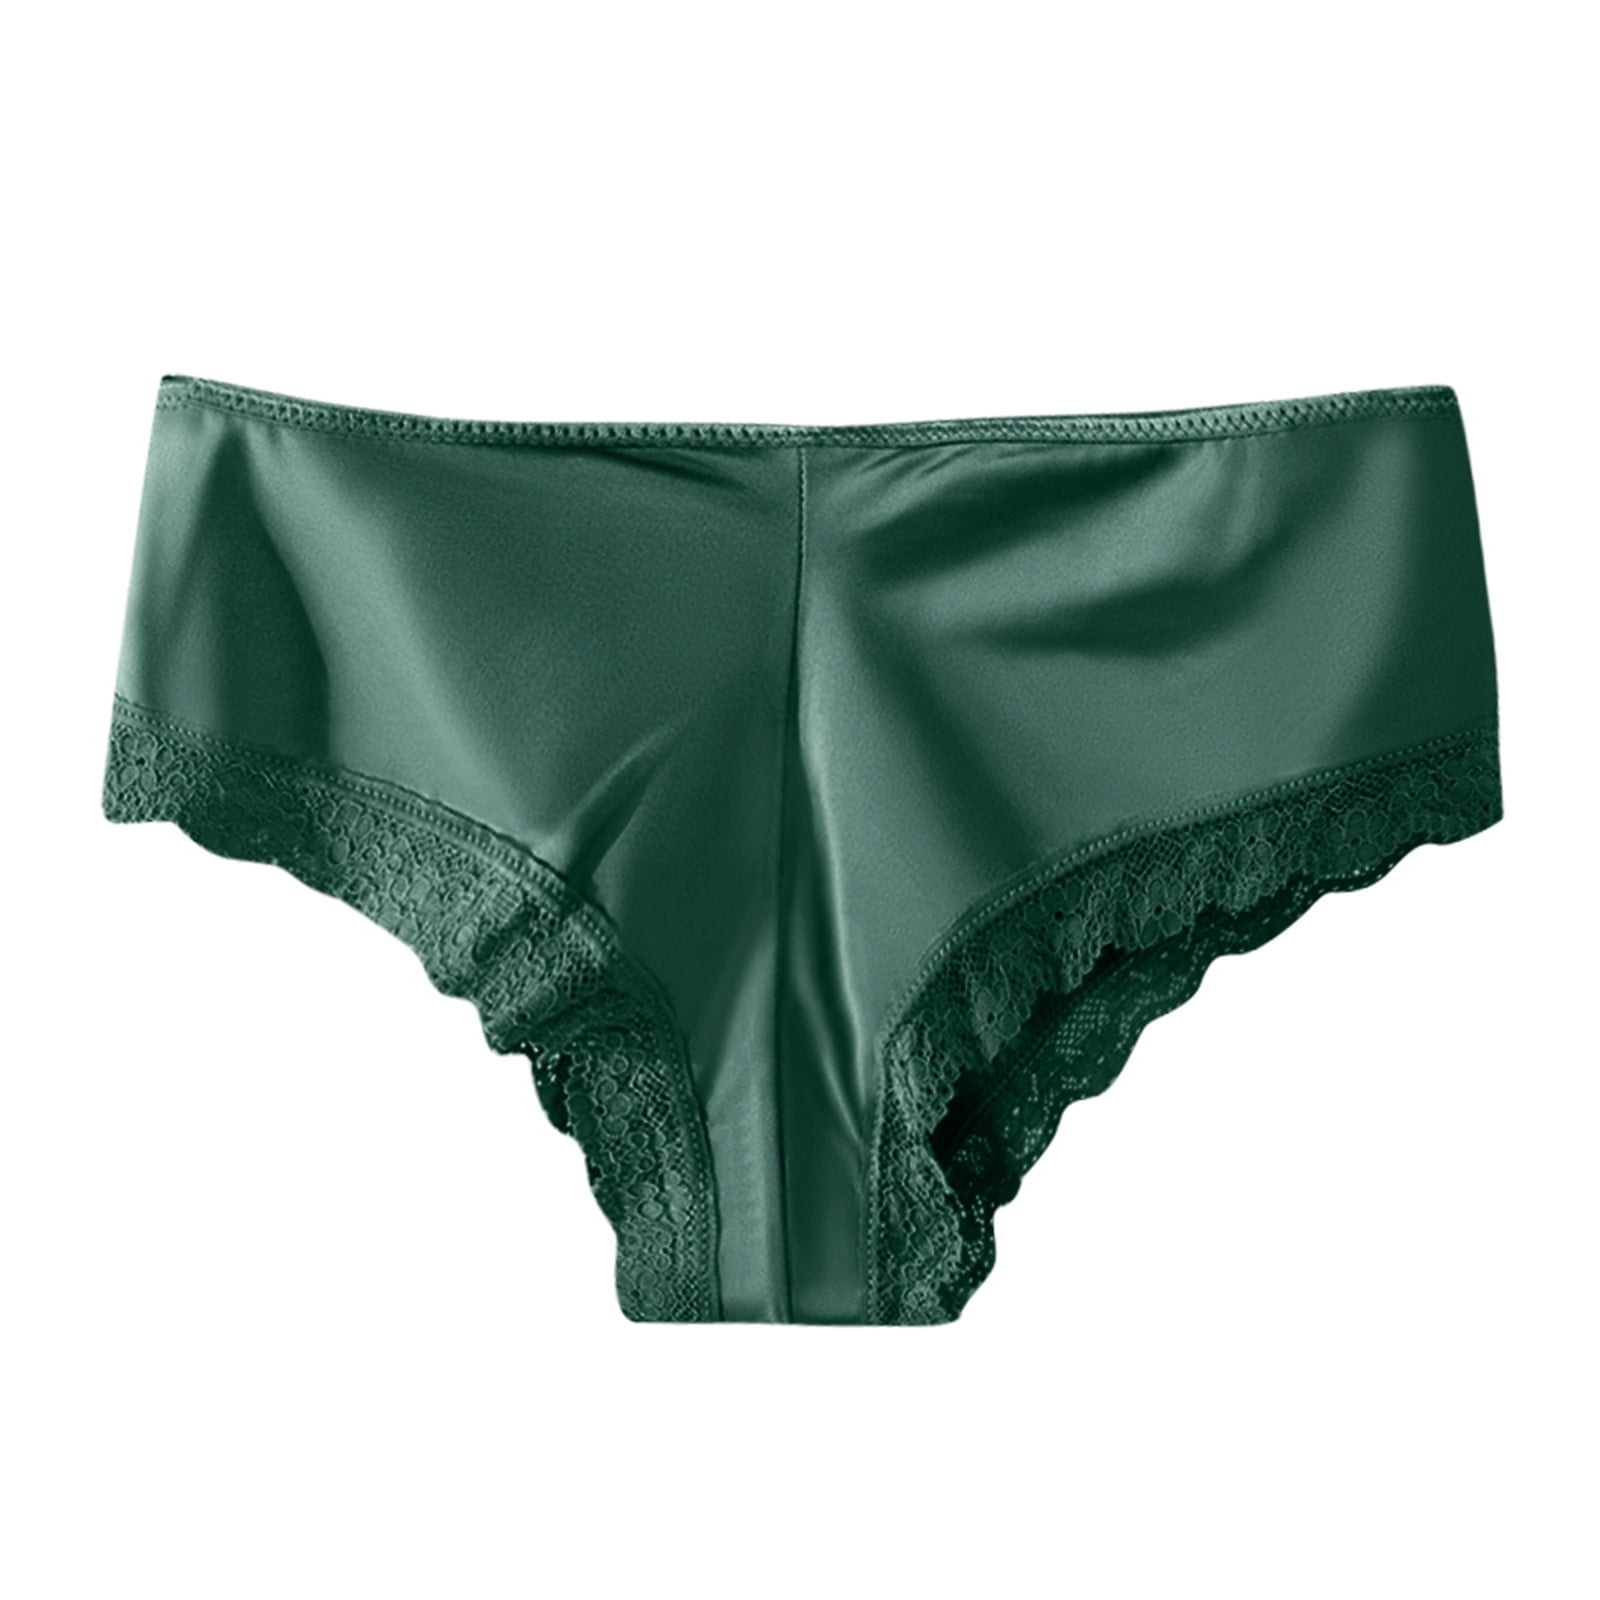 CLZOUD Cute Womens Underwear Green Lace Womens Underwear Cotton